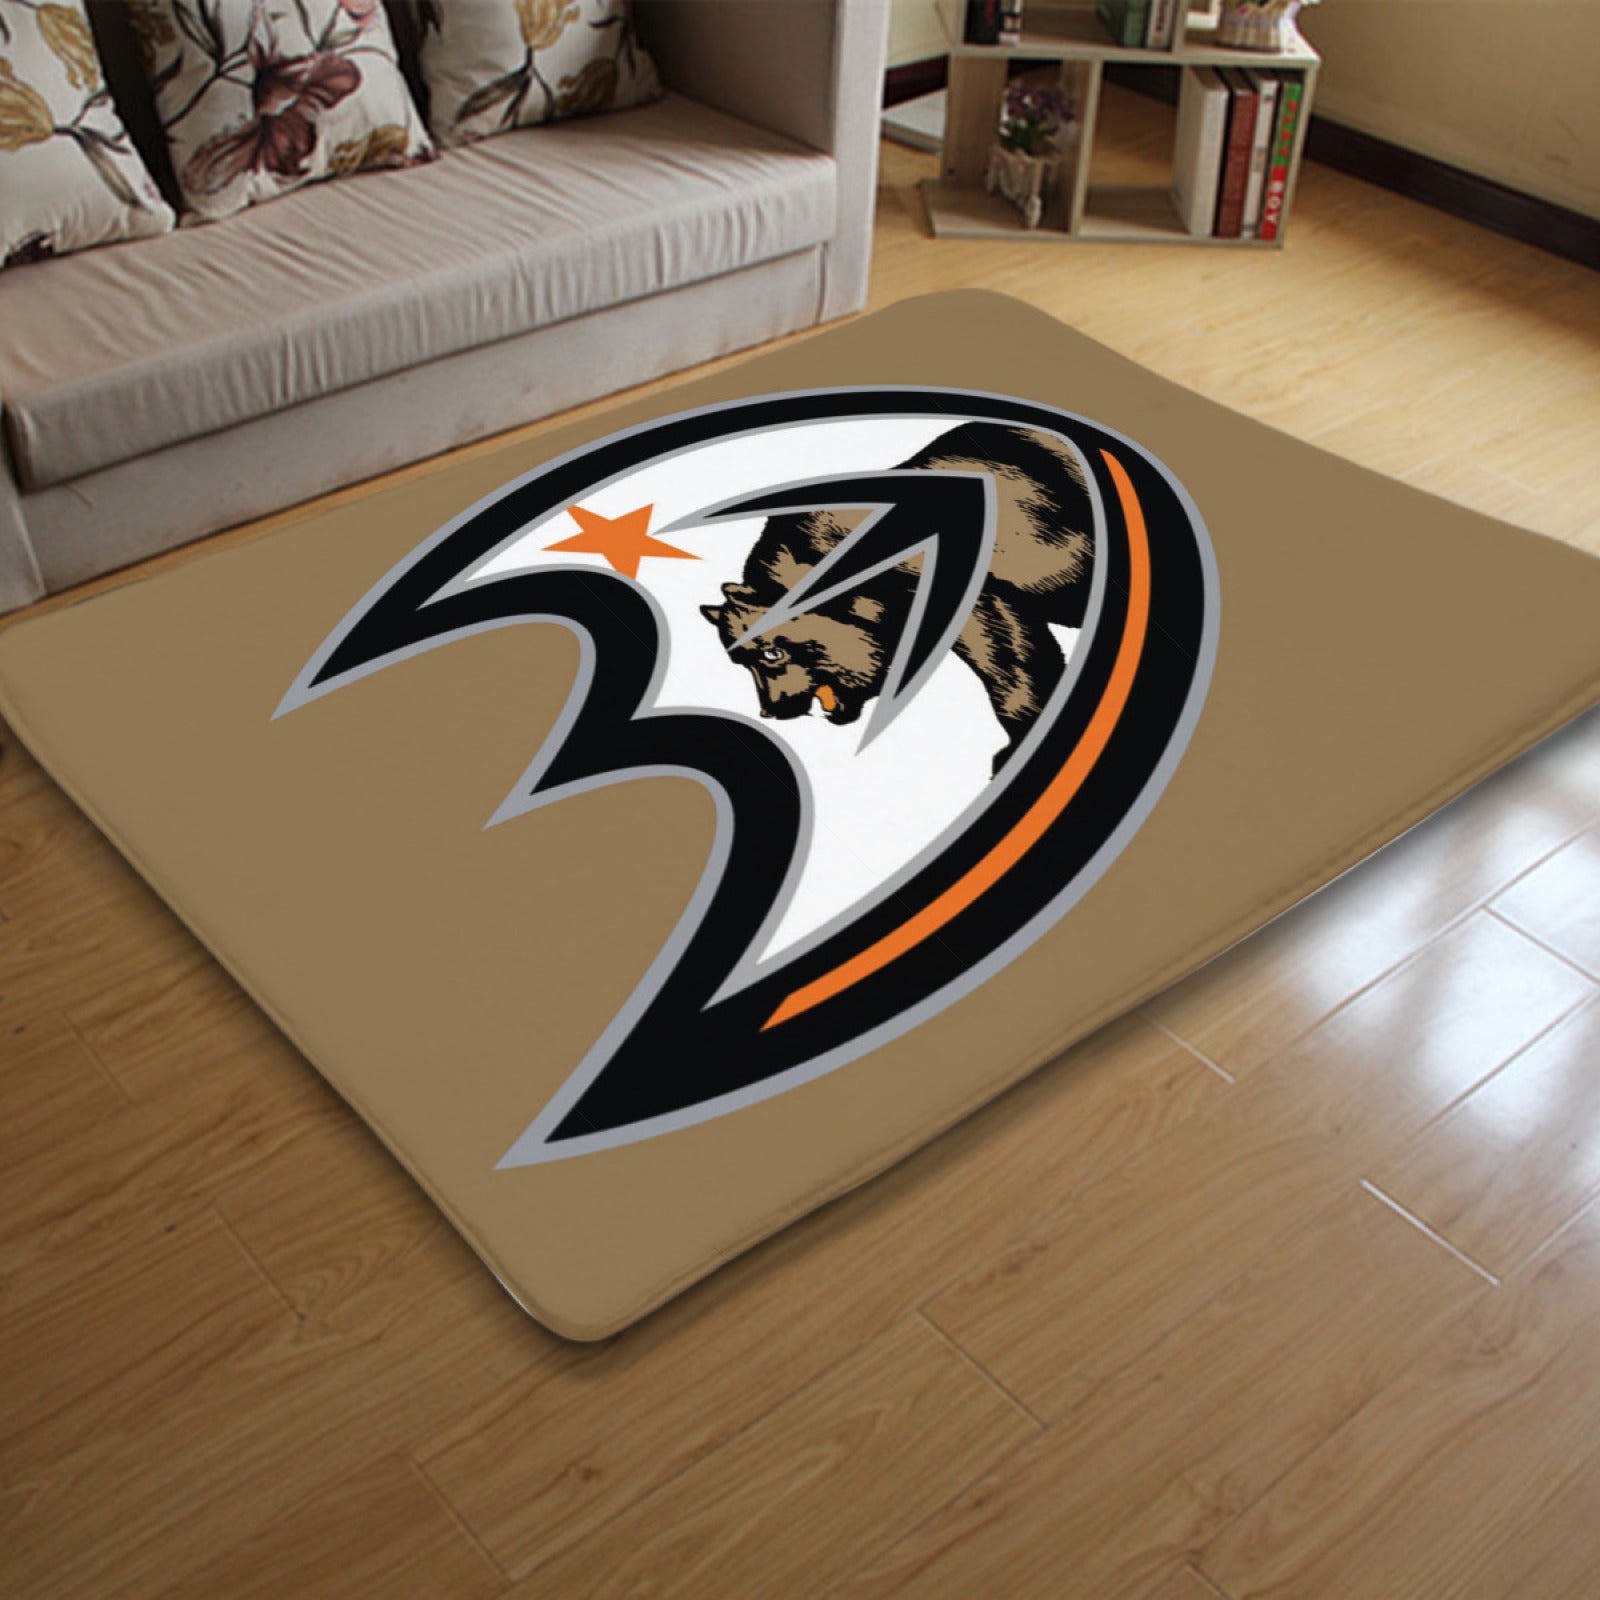 Anaheim Ducks Hockey League Carpet Living Room Bedroom Mats Kitchen Bathroom Rugs